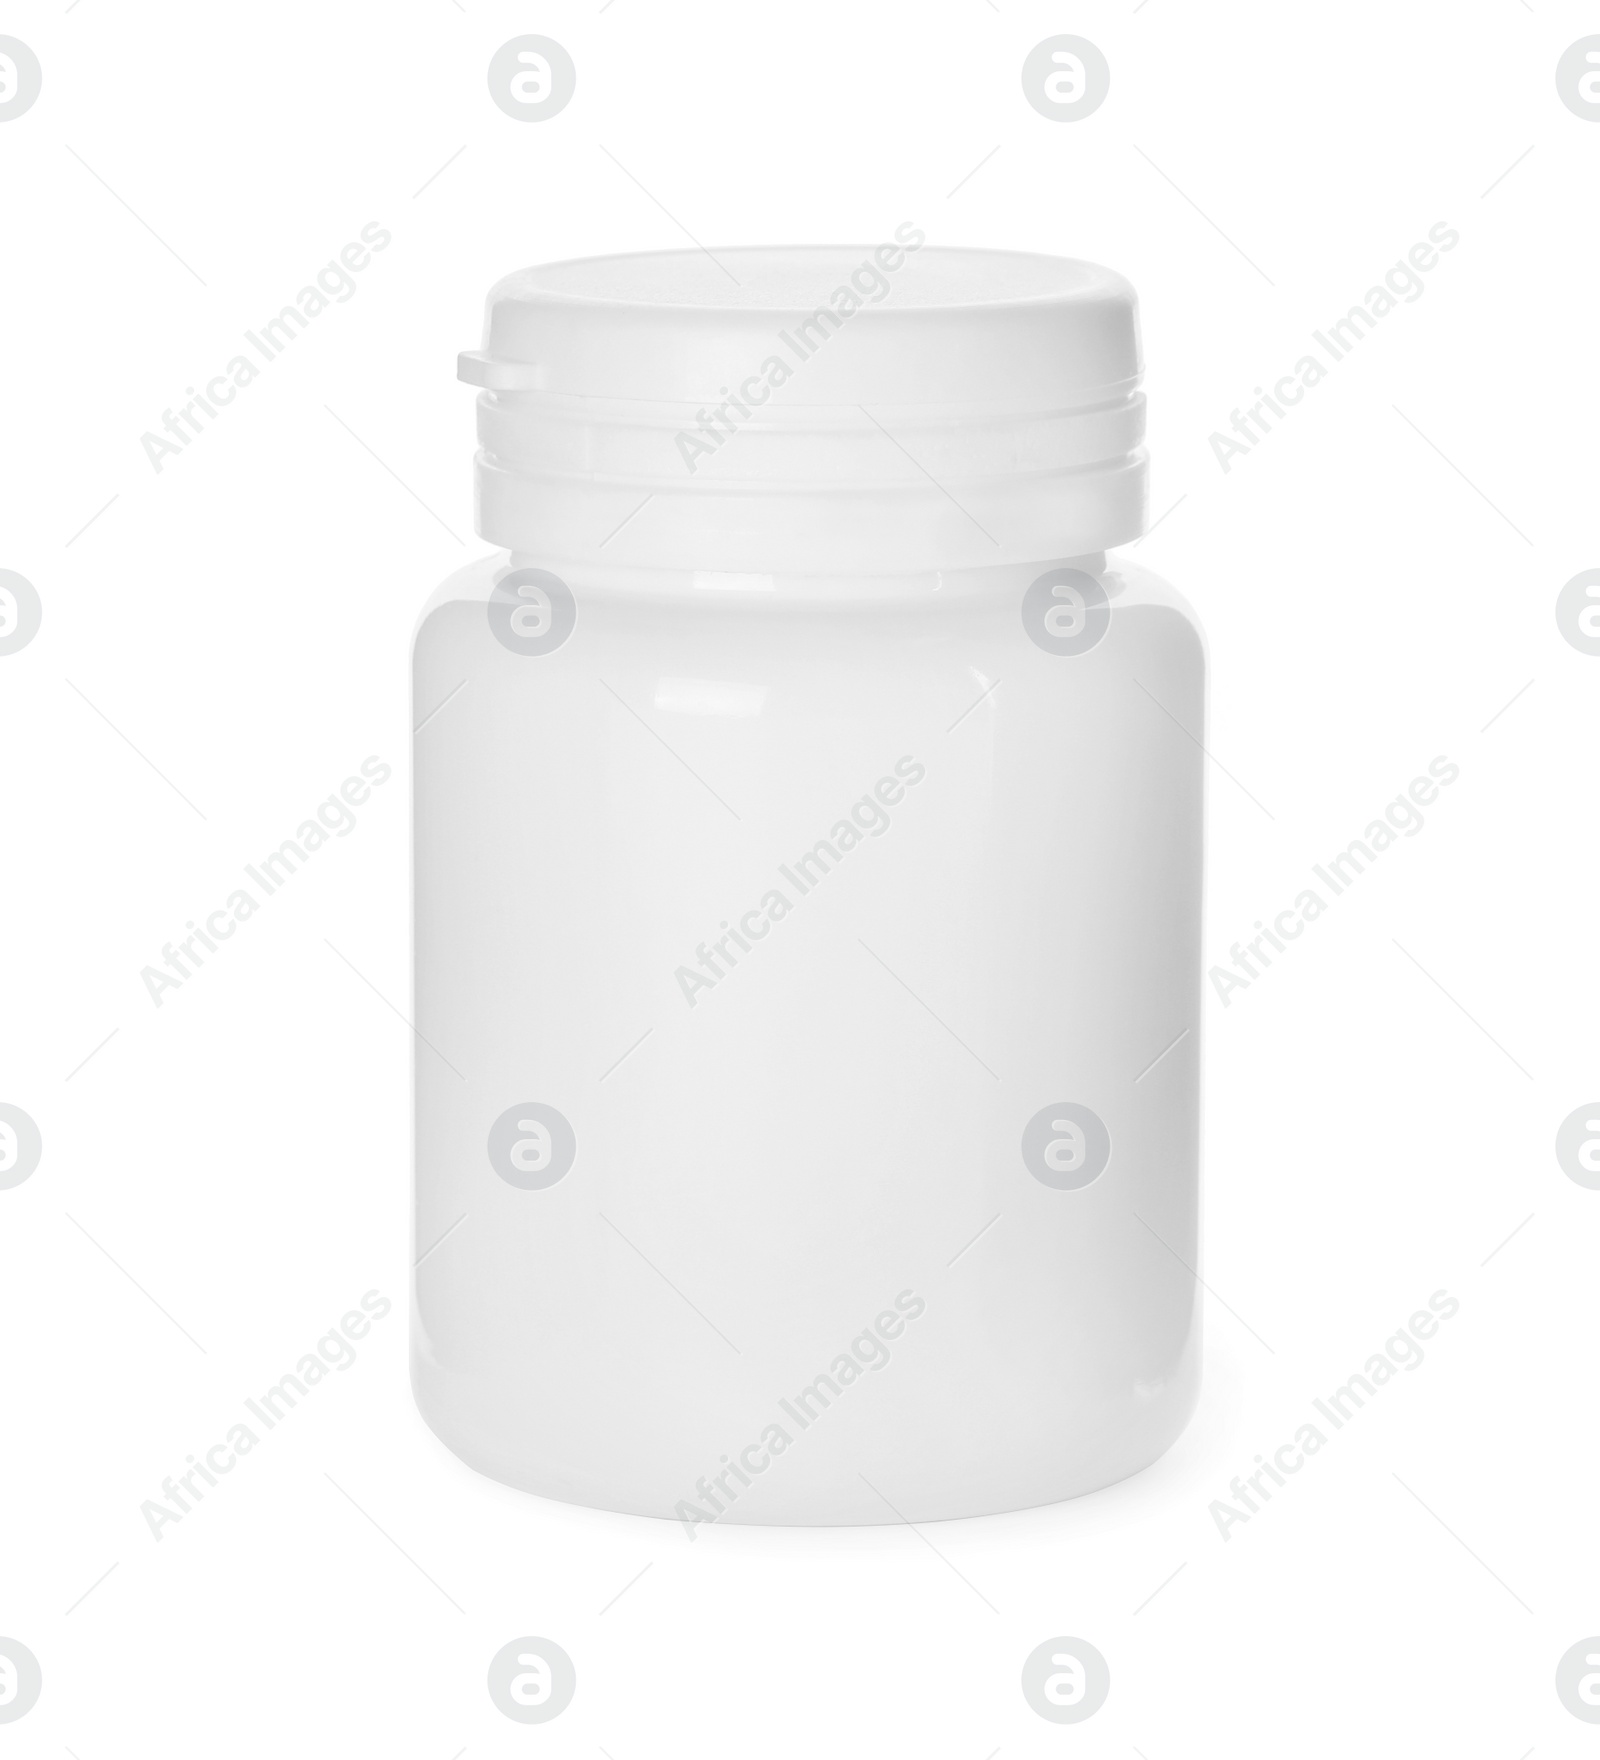 Photo of Plastic bottle for pills isolated on white